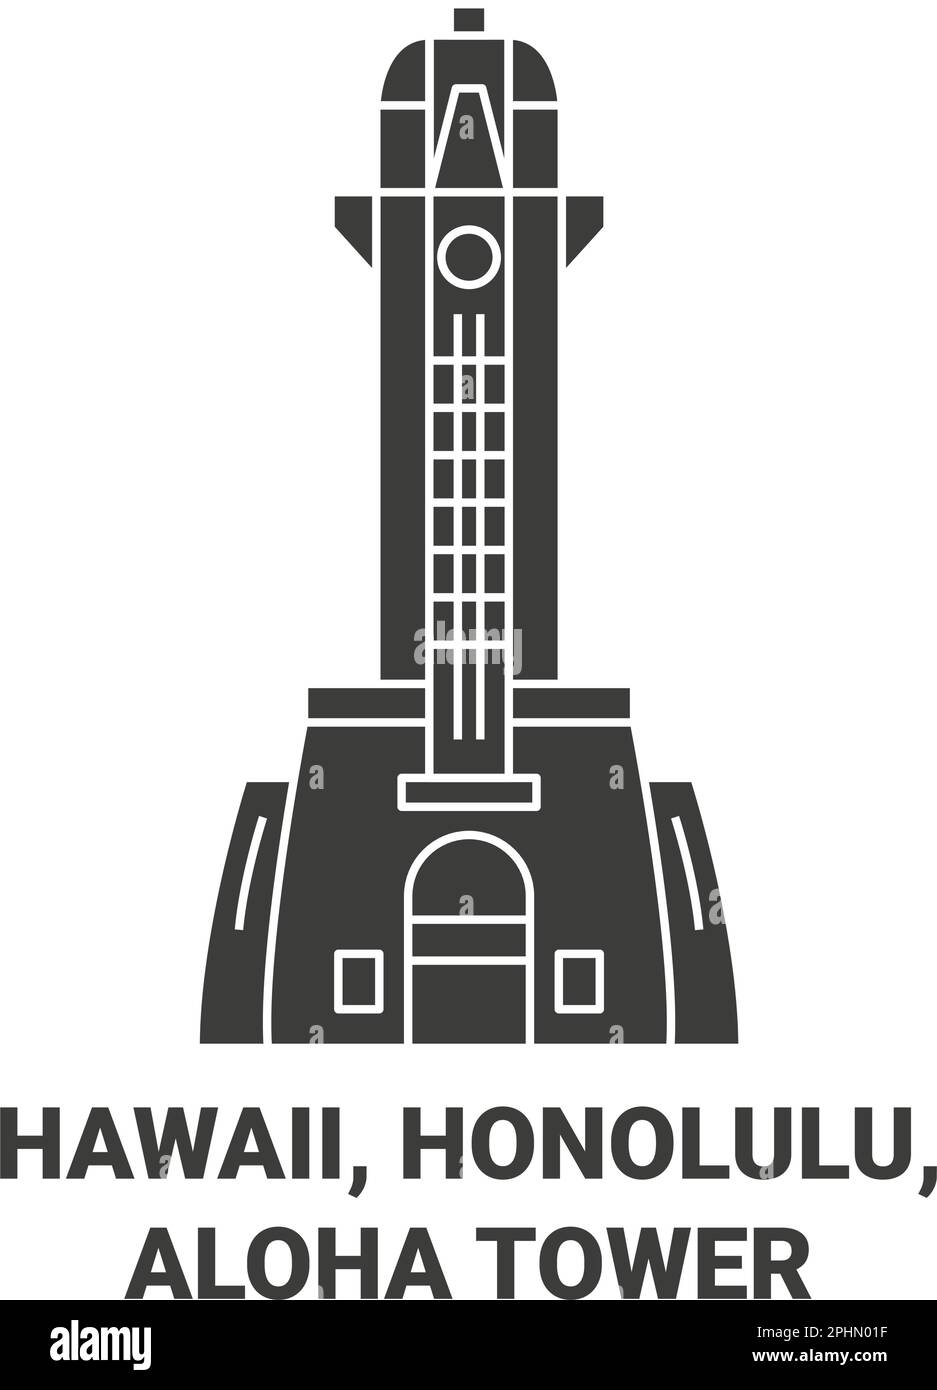 United States, Hawaii, Honolulu, Aloha Tower travel landmark vector illustration Stock Vector